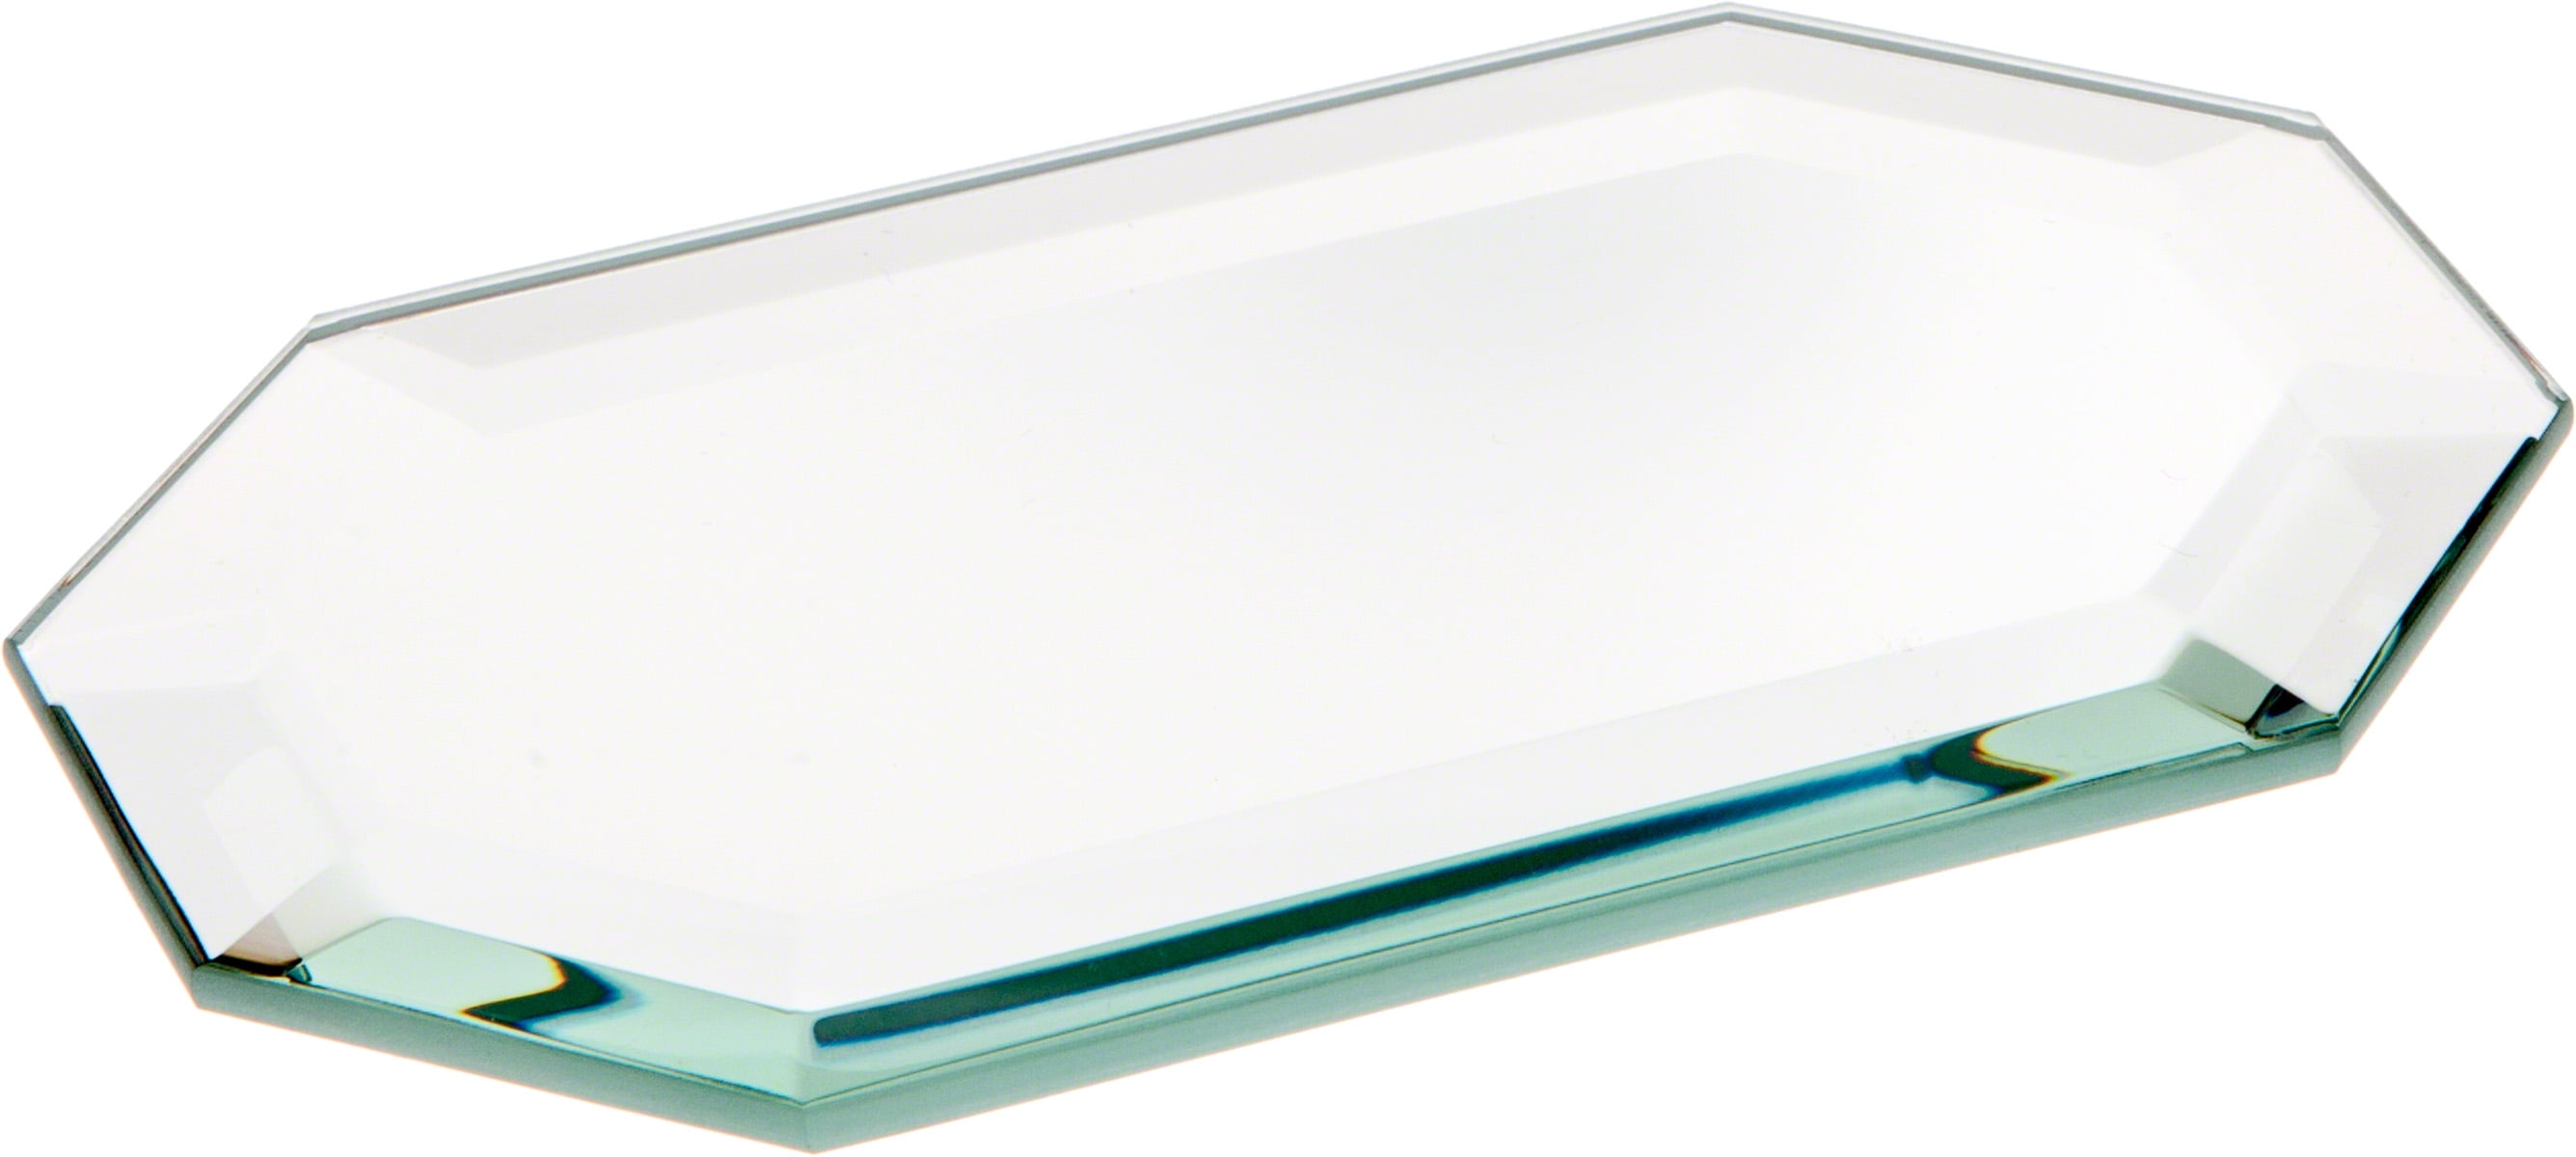 6 inch x 8 inch Plymor Diamond 3mm Beveled Glass Mirror 